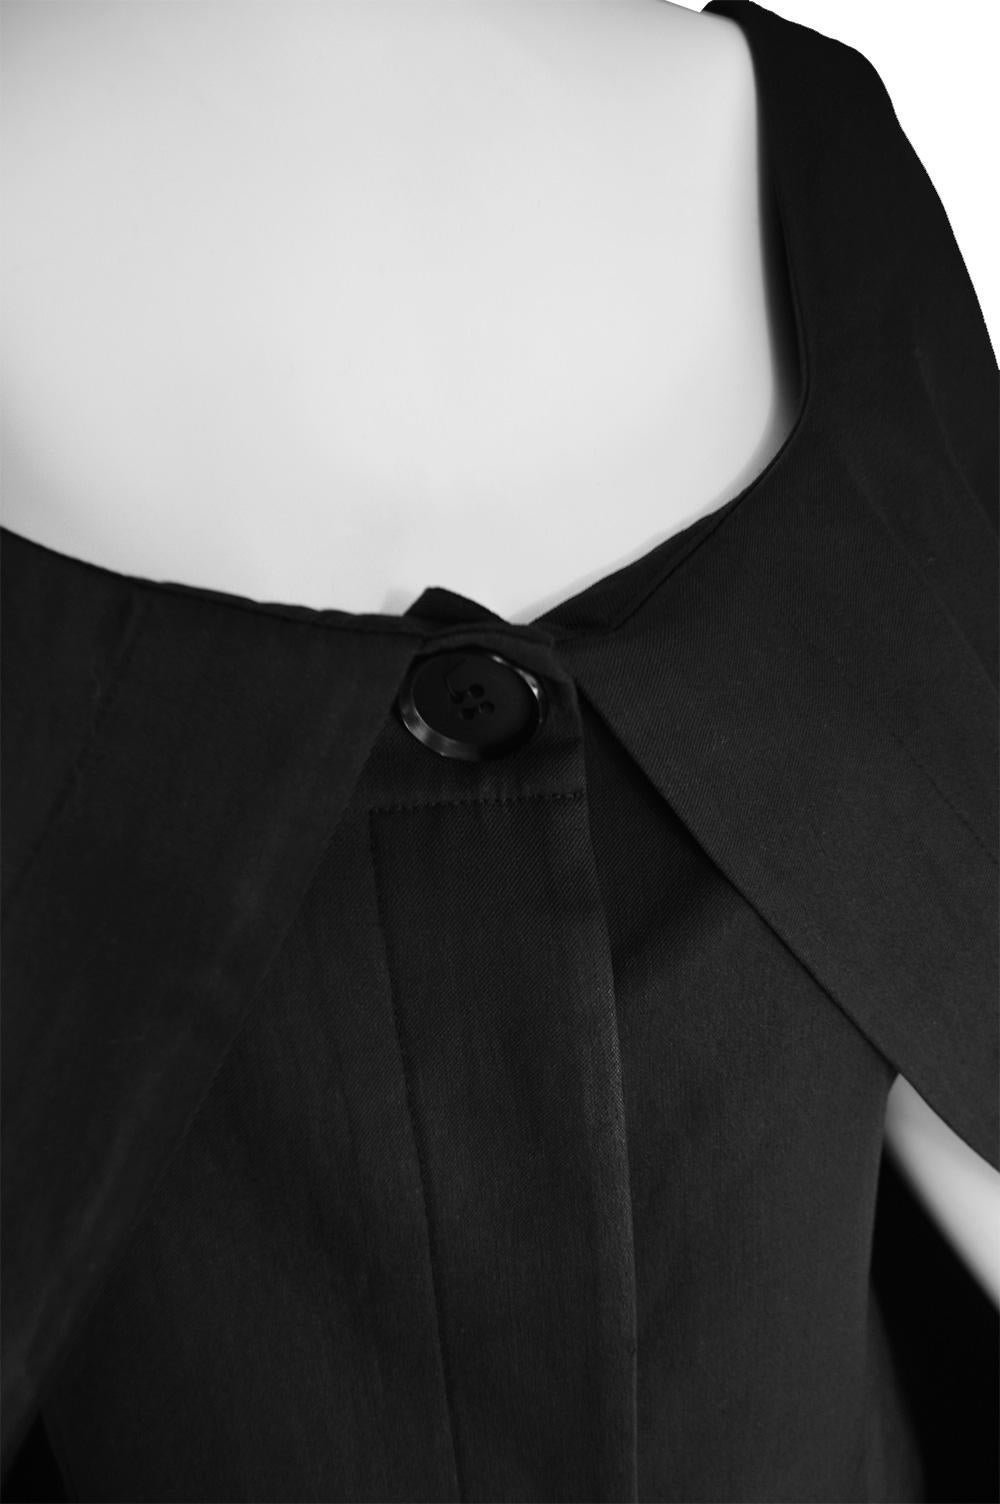 Early John Galliano Black Avant Garde Cape Dress Made in Britain, 1980s 2